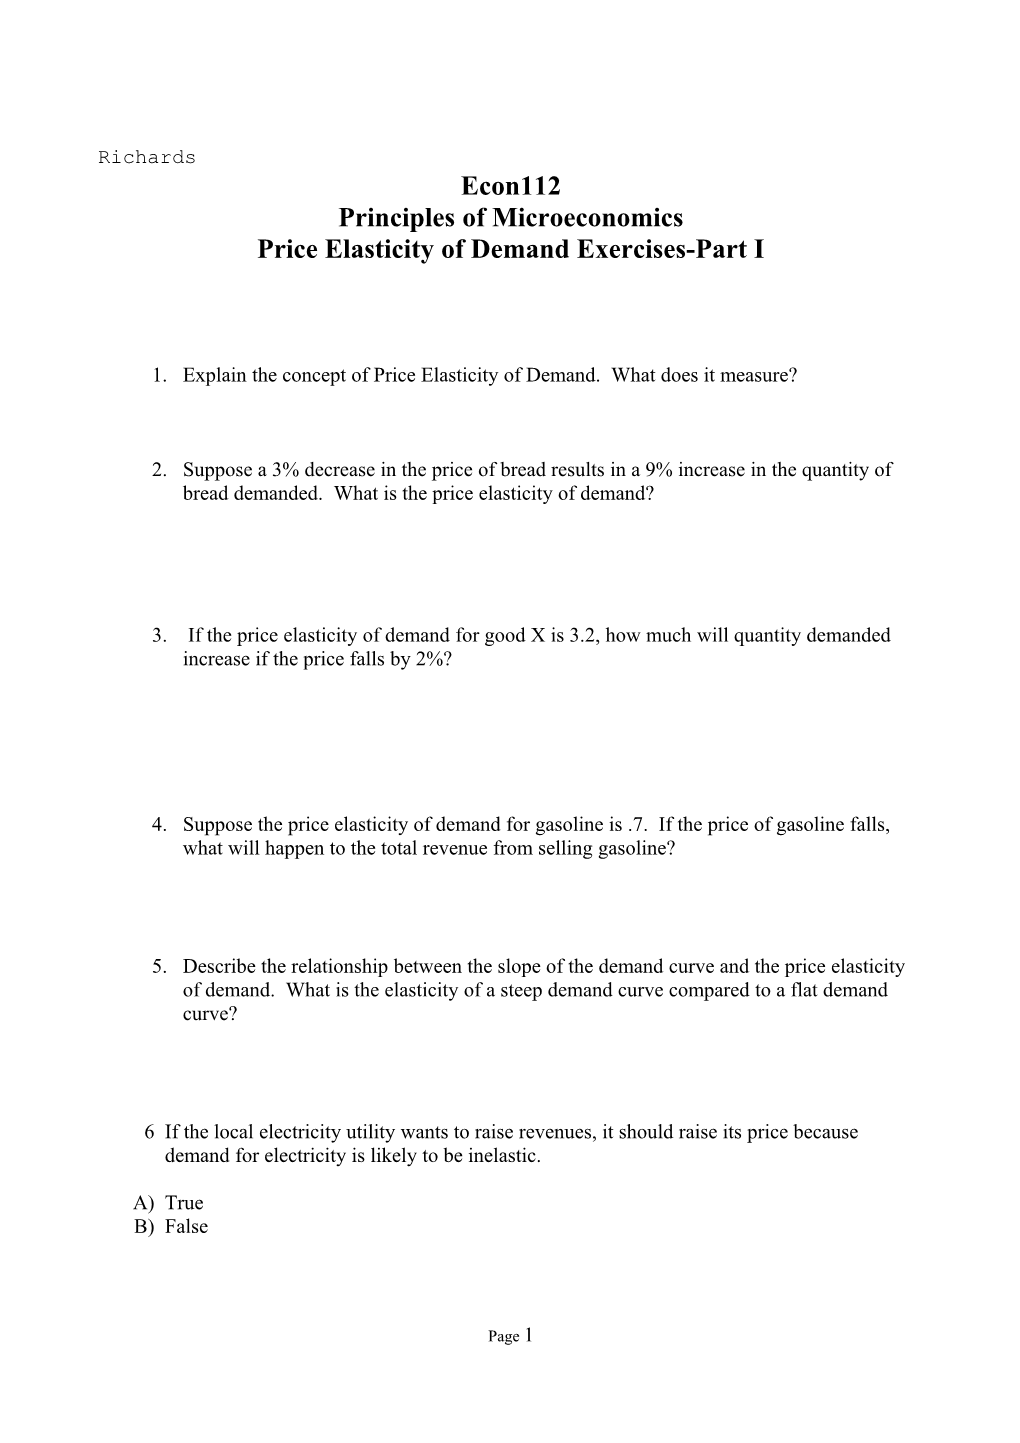 Price Elasticity of Demand Exercises-Part I